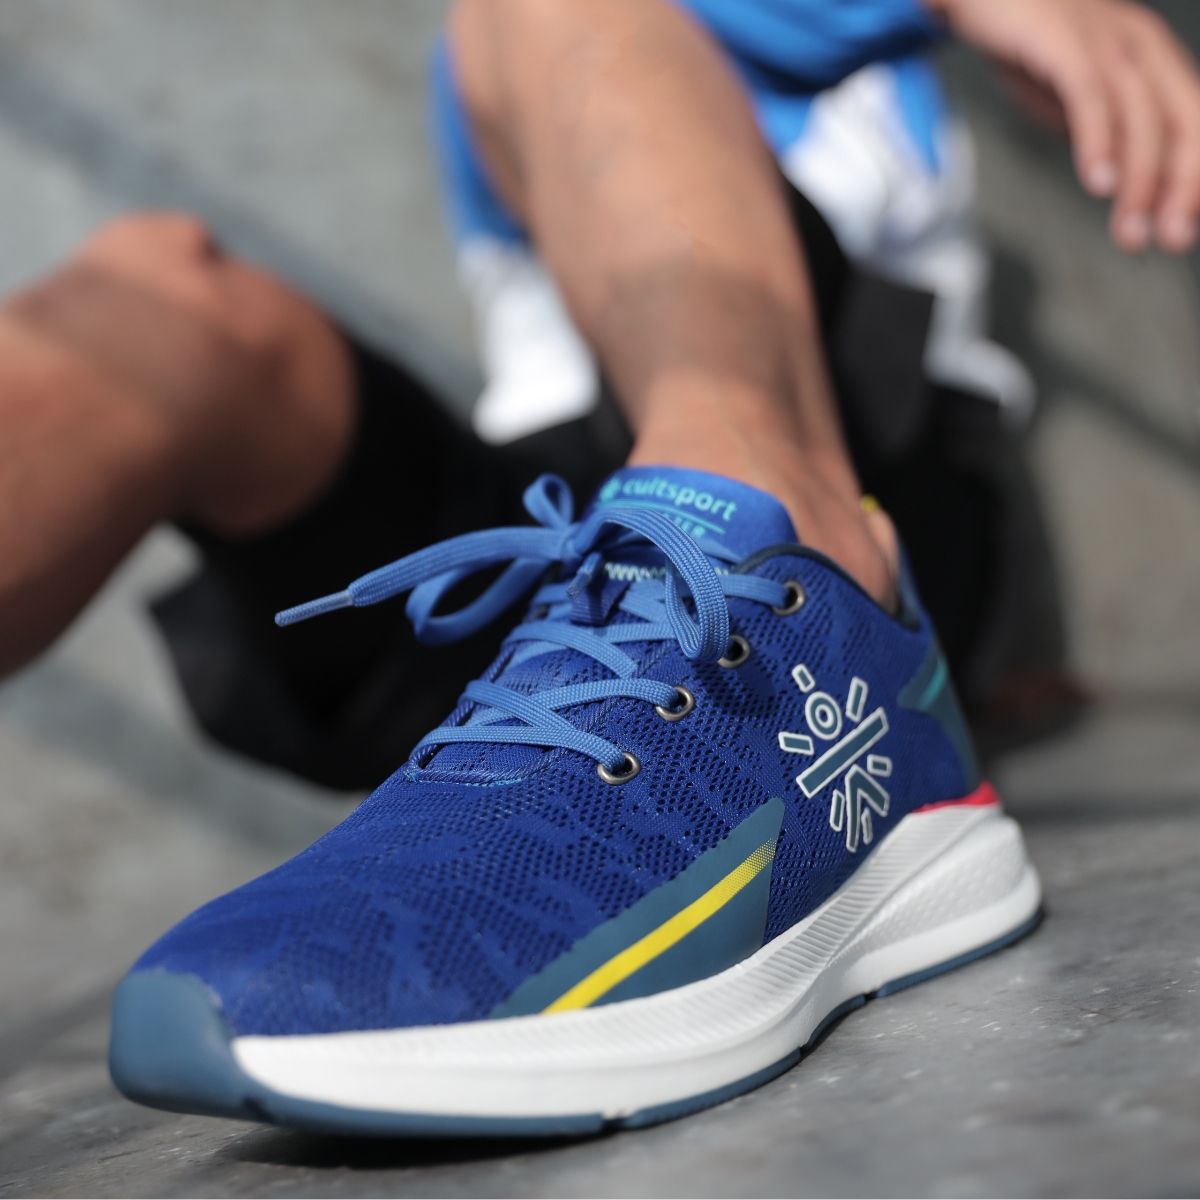 Cultsport Unisex Mesh Windblazer Blue Running Shoe: Buy Cultsport ...